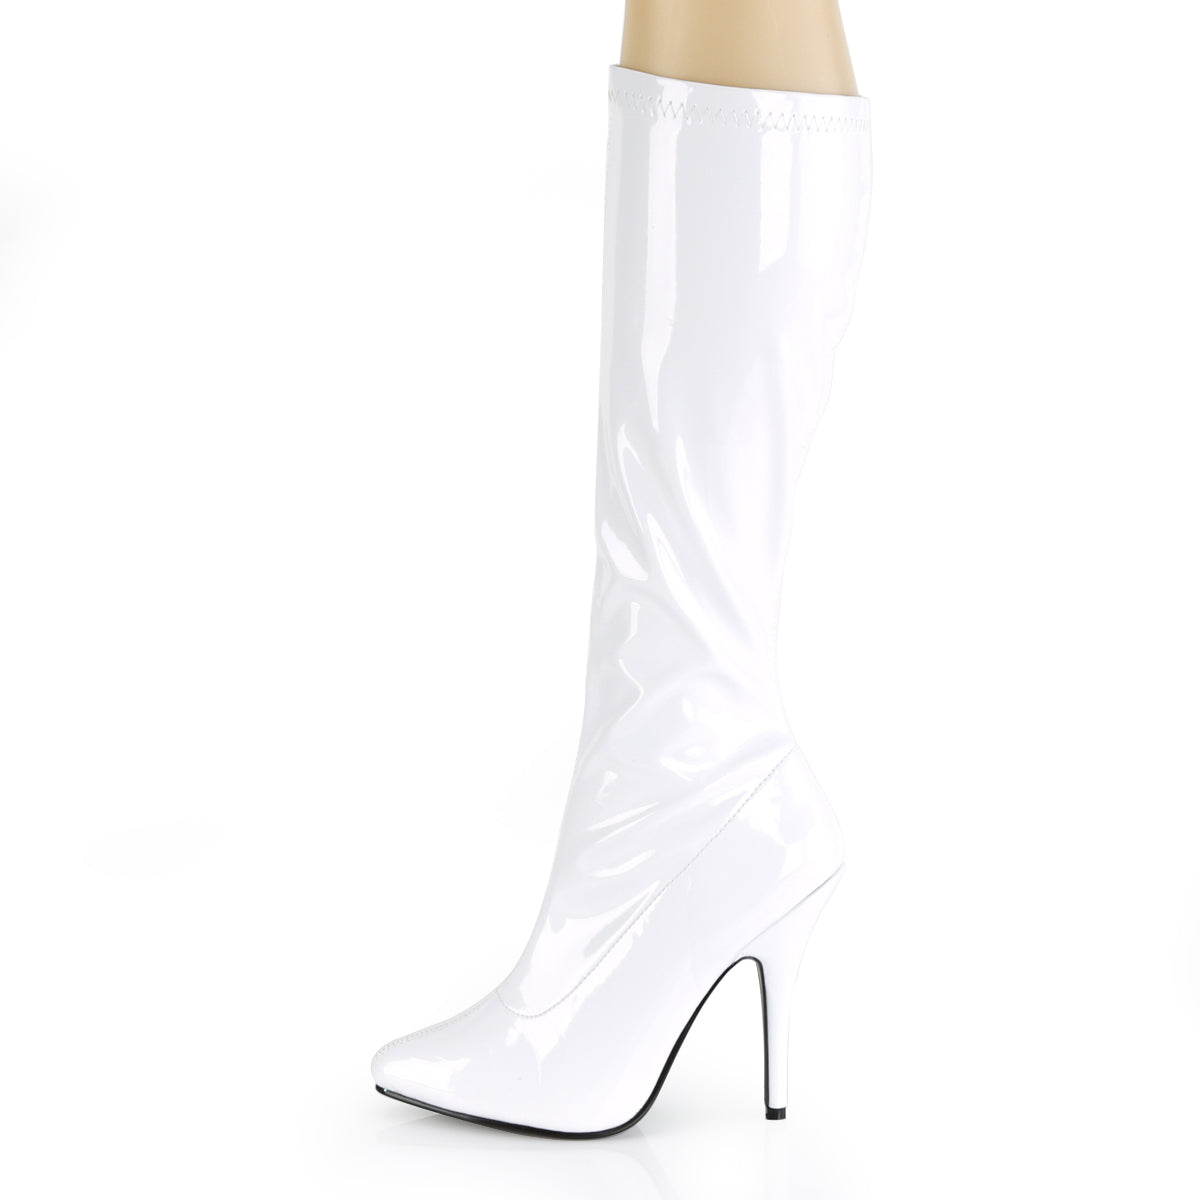 5 Inch Heel SEDUCE-2000 White Stretch Patent